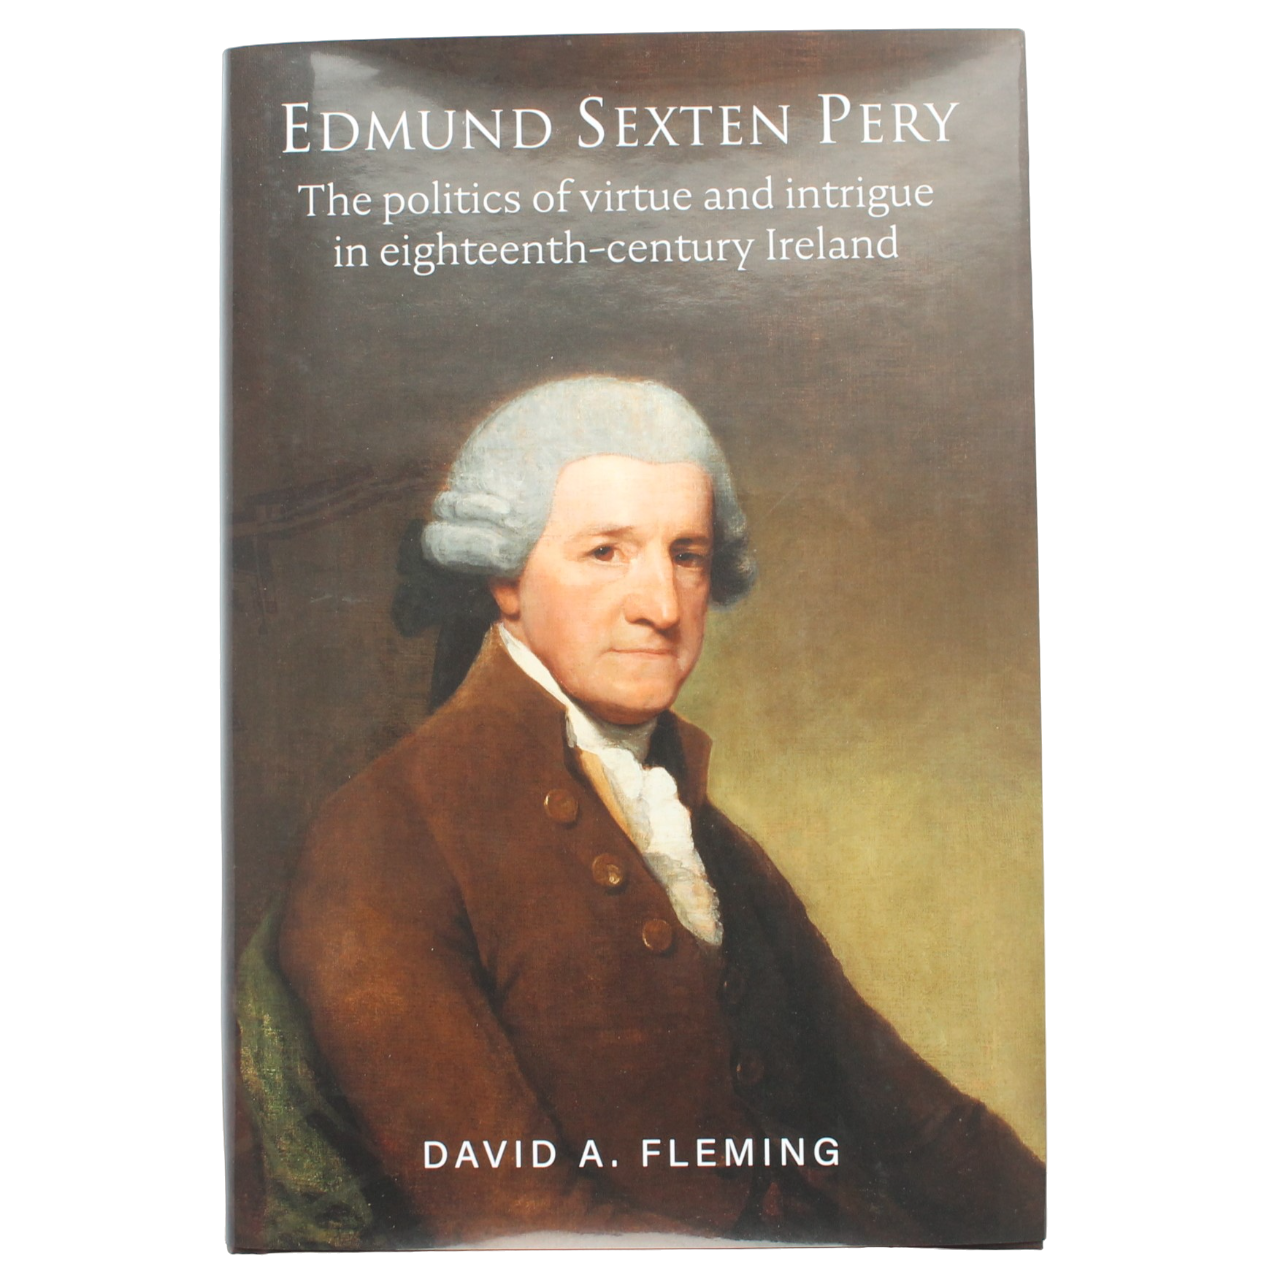 Edmund Sexten Pery - The politics of virtue and intrigue in eighteenth-century Ireland - David A. Fleming